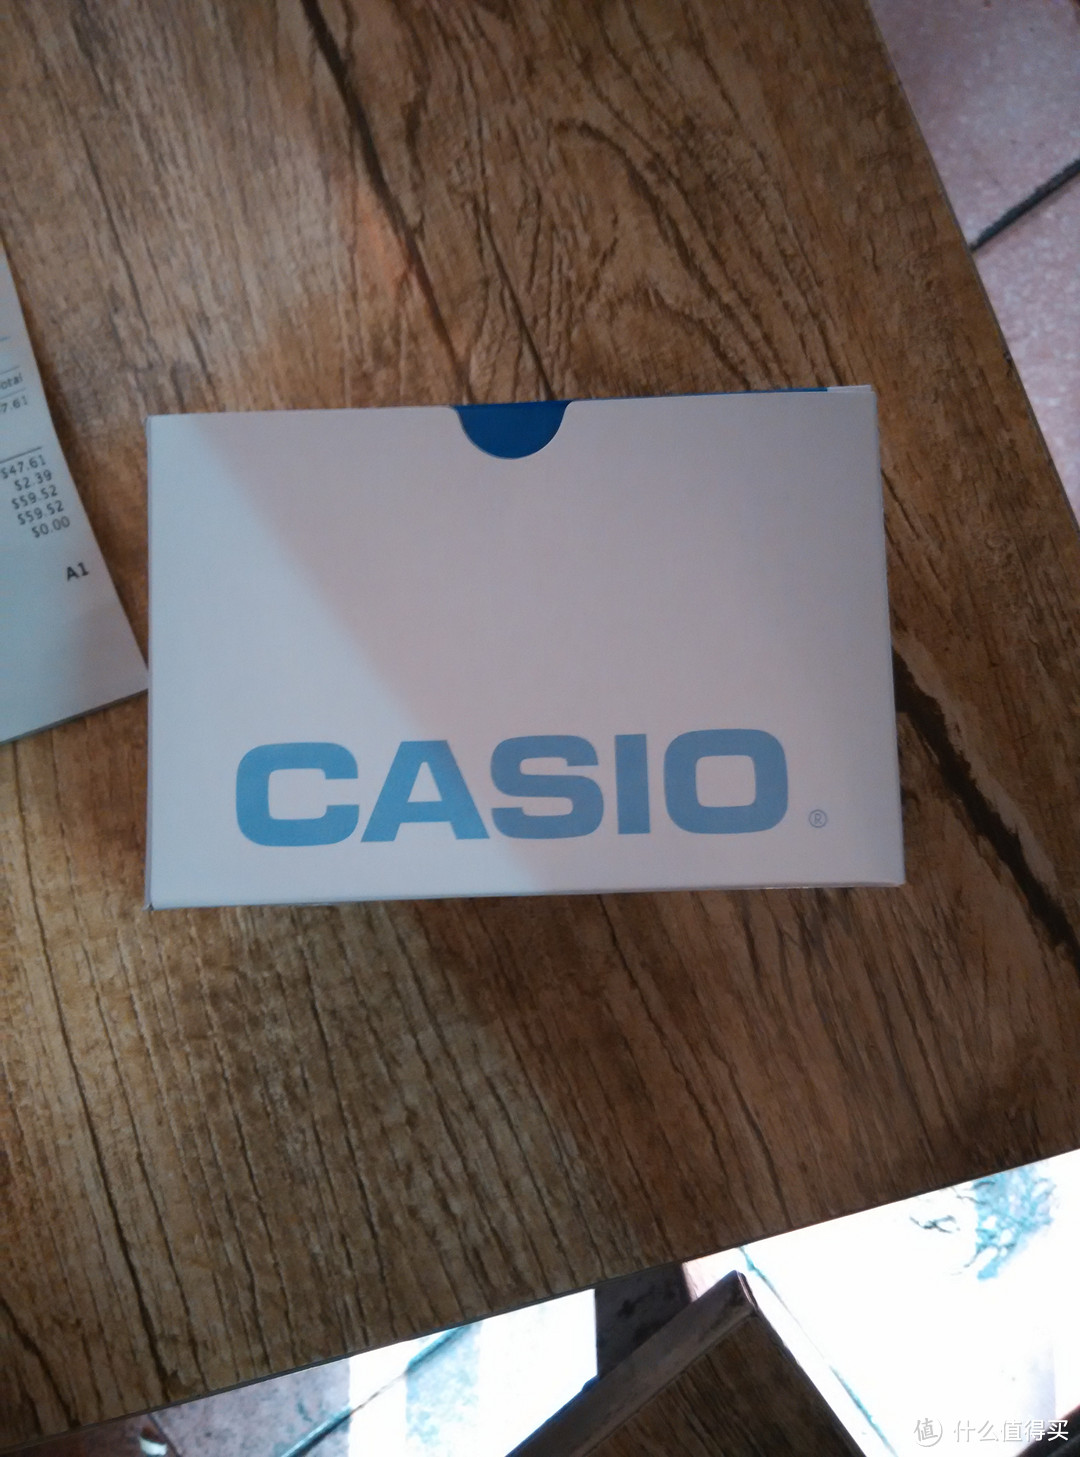 Casio 卡西欧 SGW400H-1BV 男款运动腕表